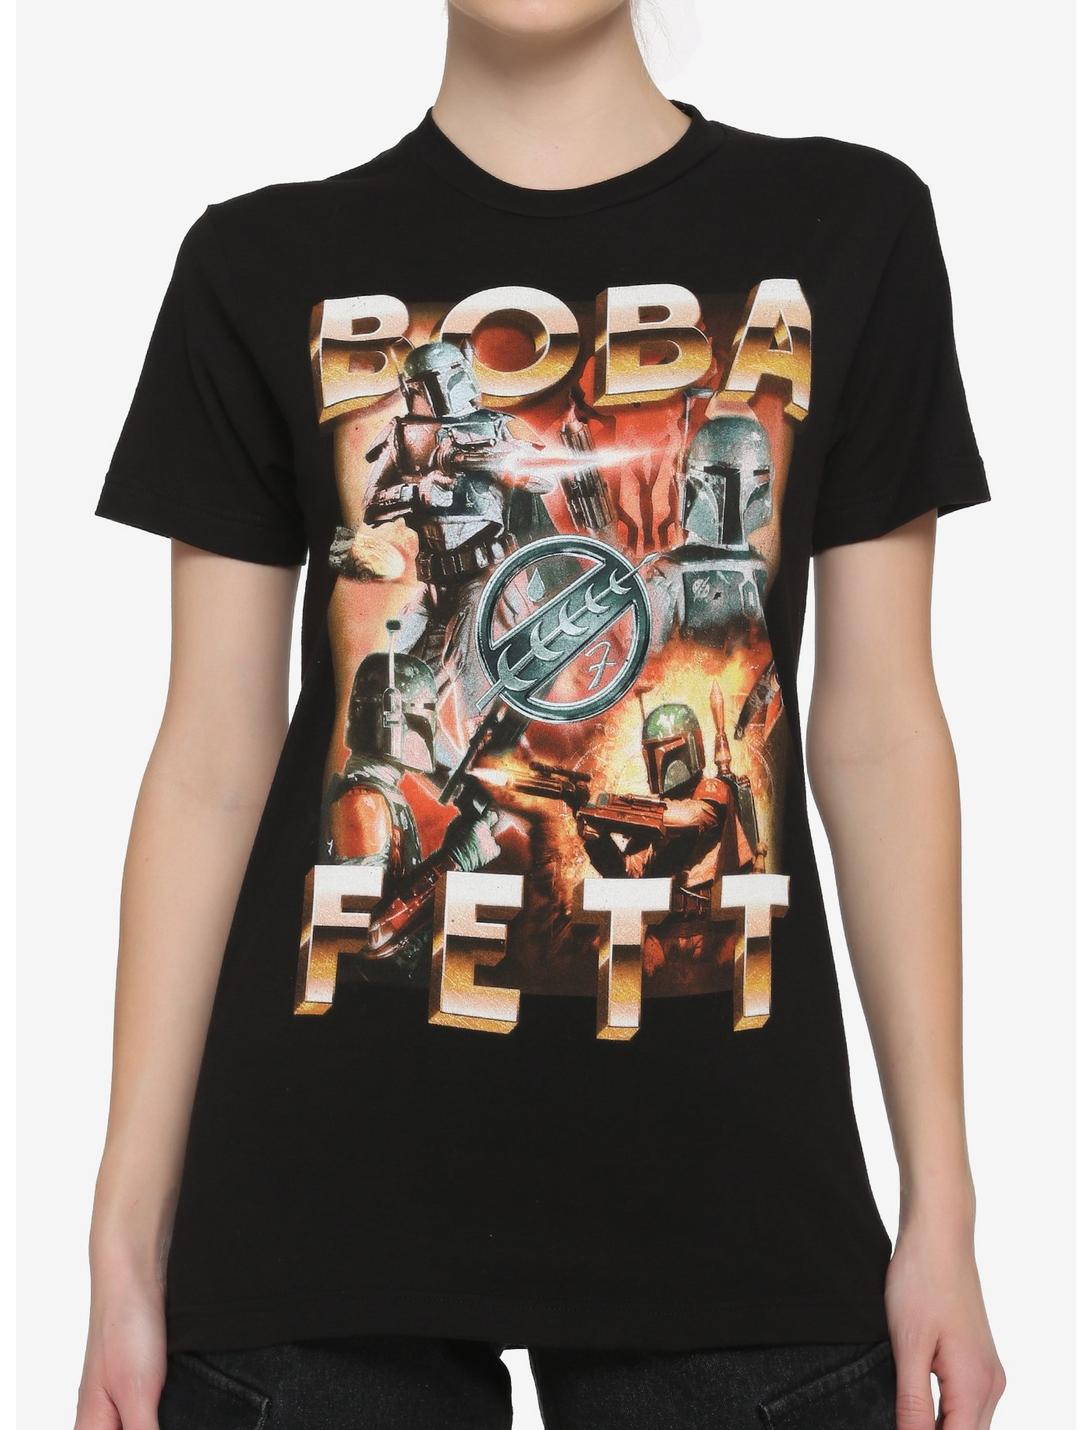 Star Wars Boba Fett '90s T-Shirt, MULTI, hi-res